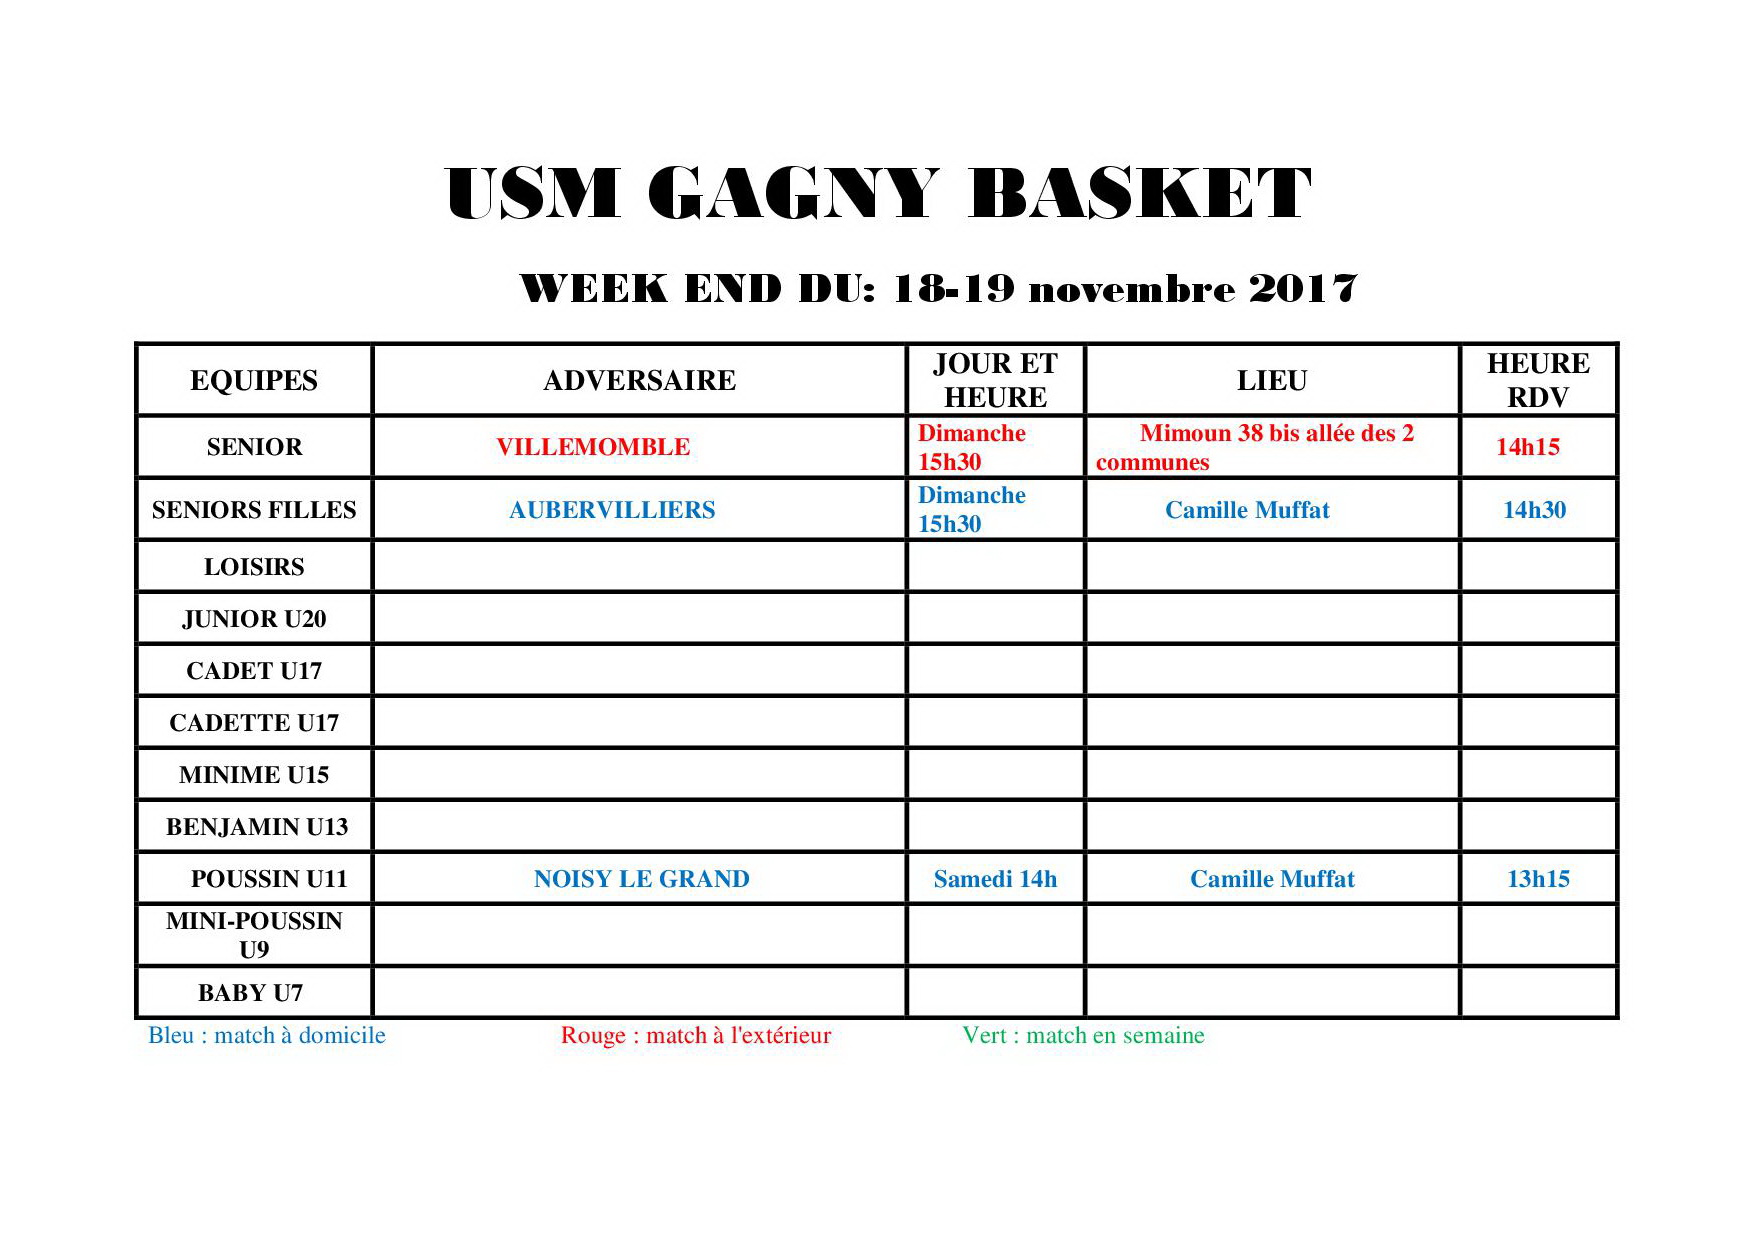 Usmg gagny planning week end 18 19 novembre 2017